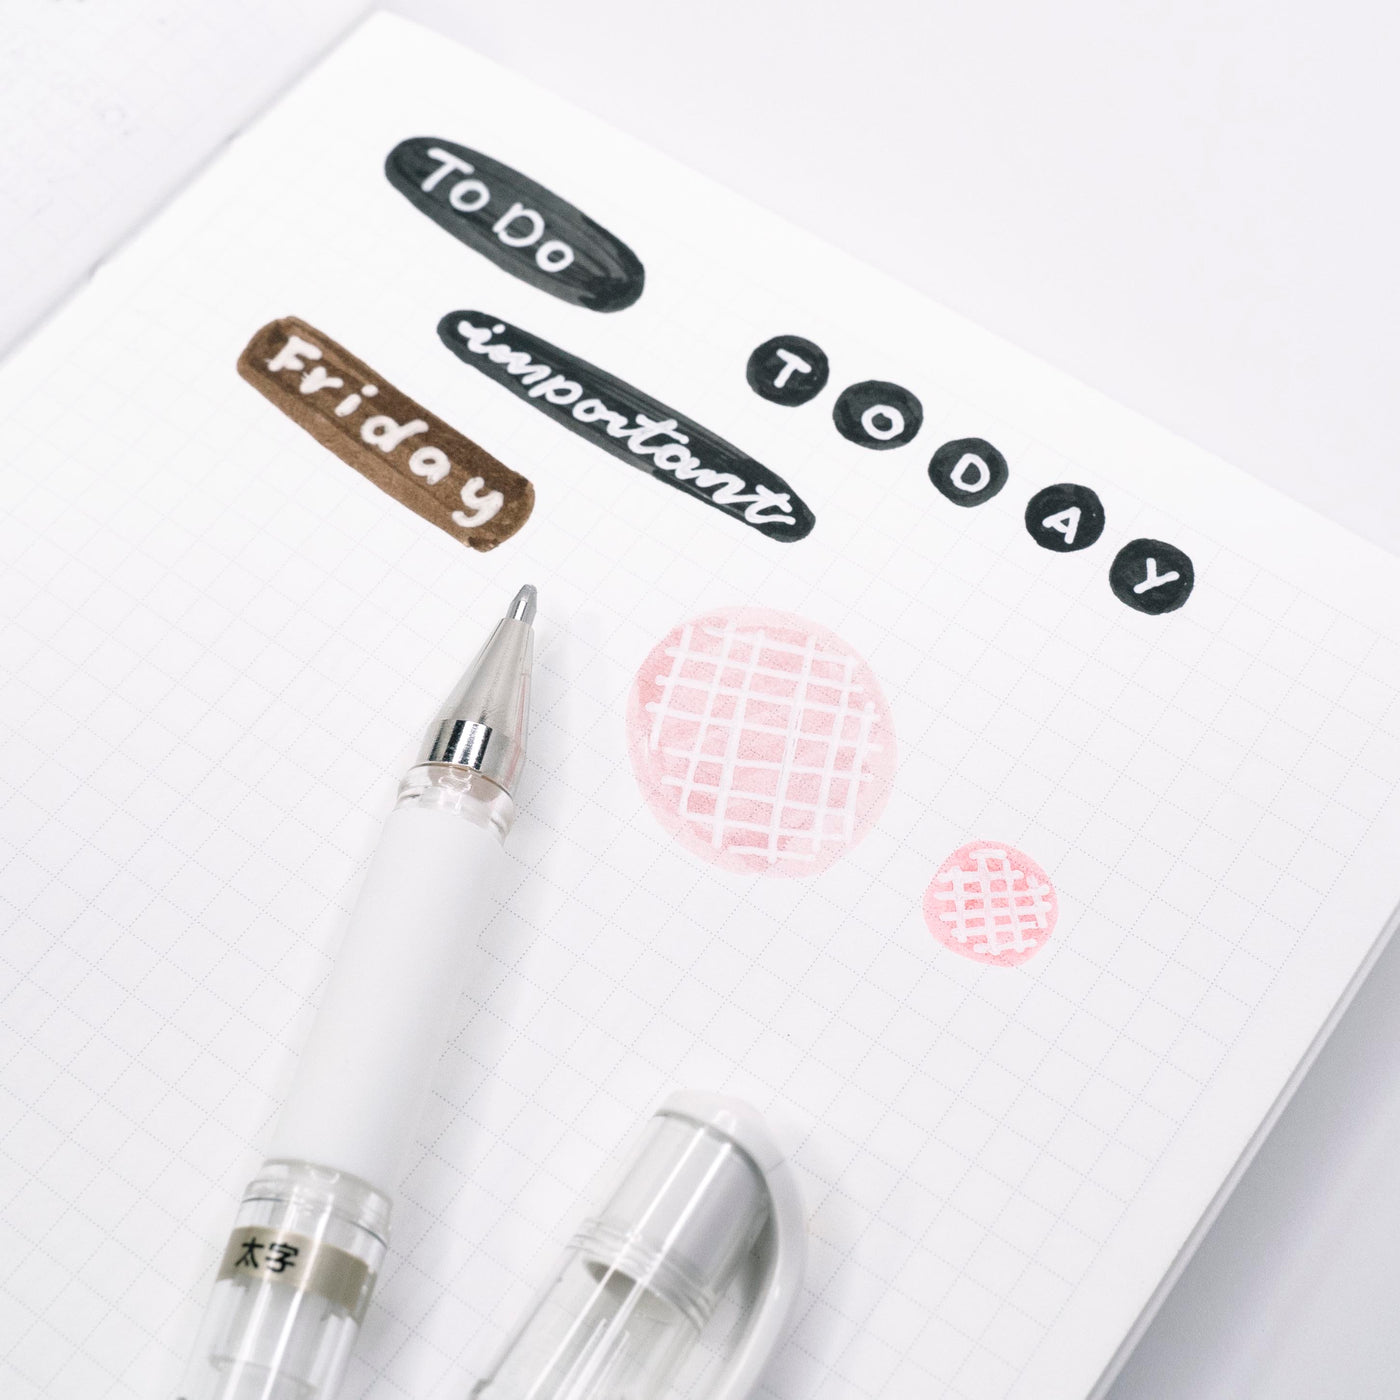 Inkssentials – White Opaque Pens